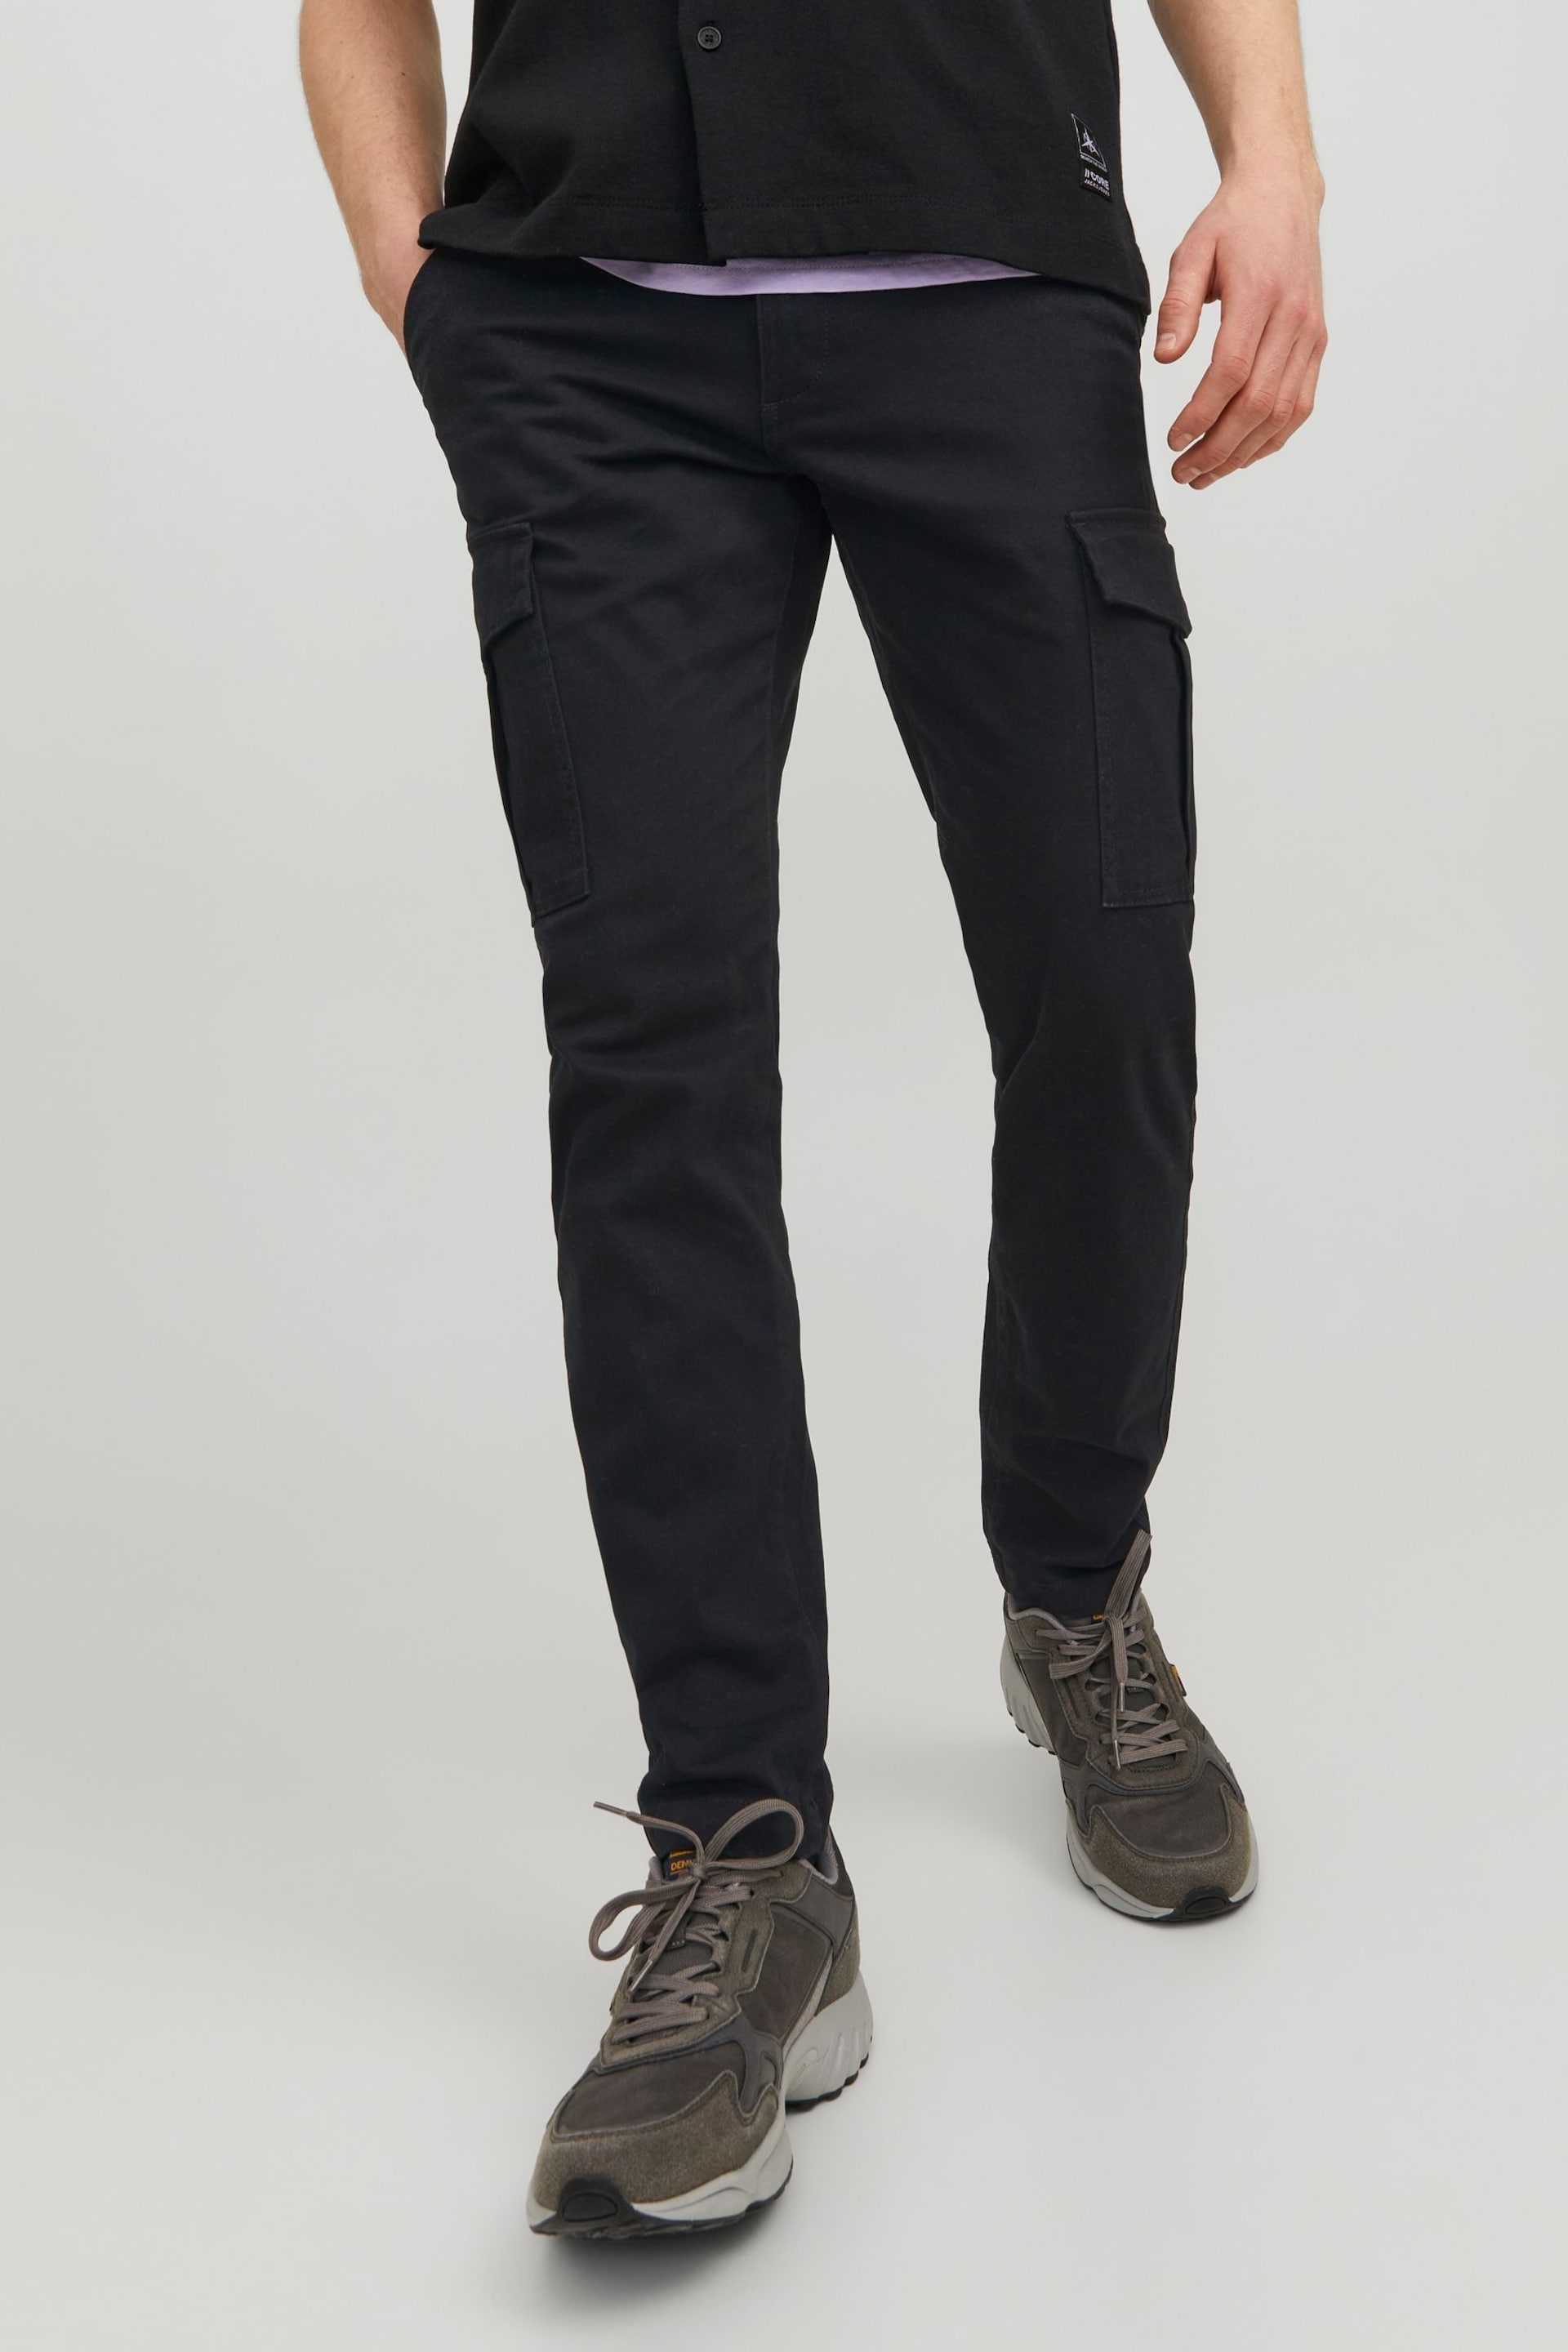 JACK & JONES Black Slim Leg Cuffed Cargo Trousers - Image 1 of 6